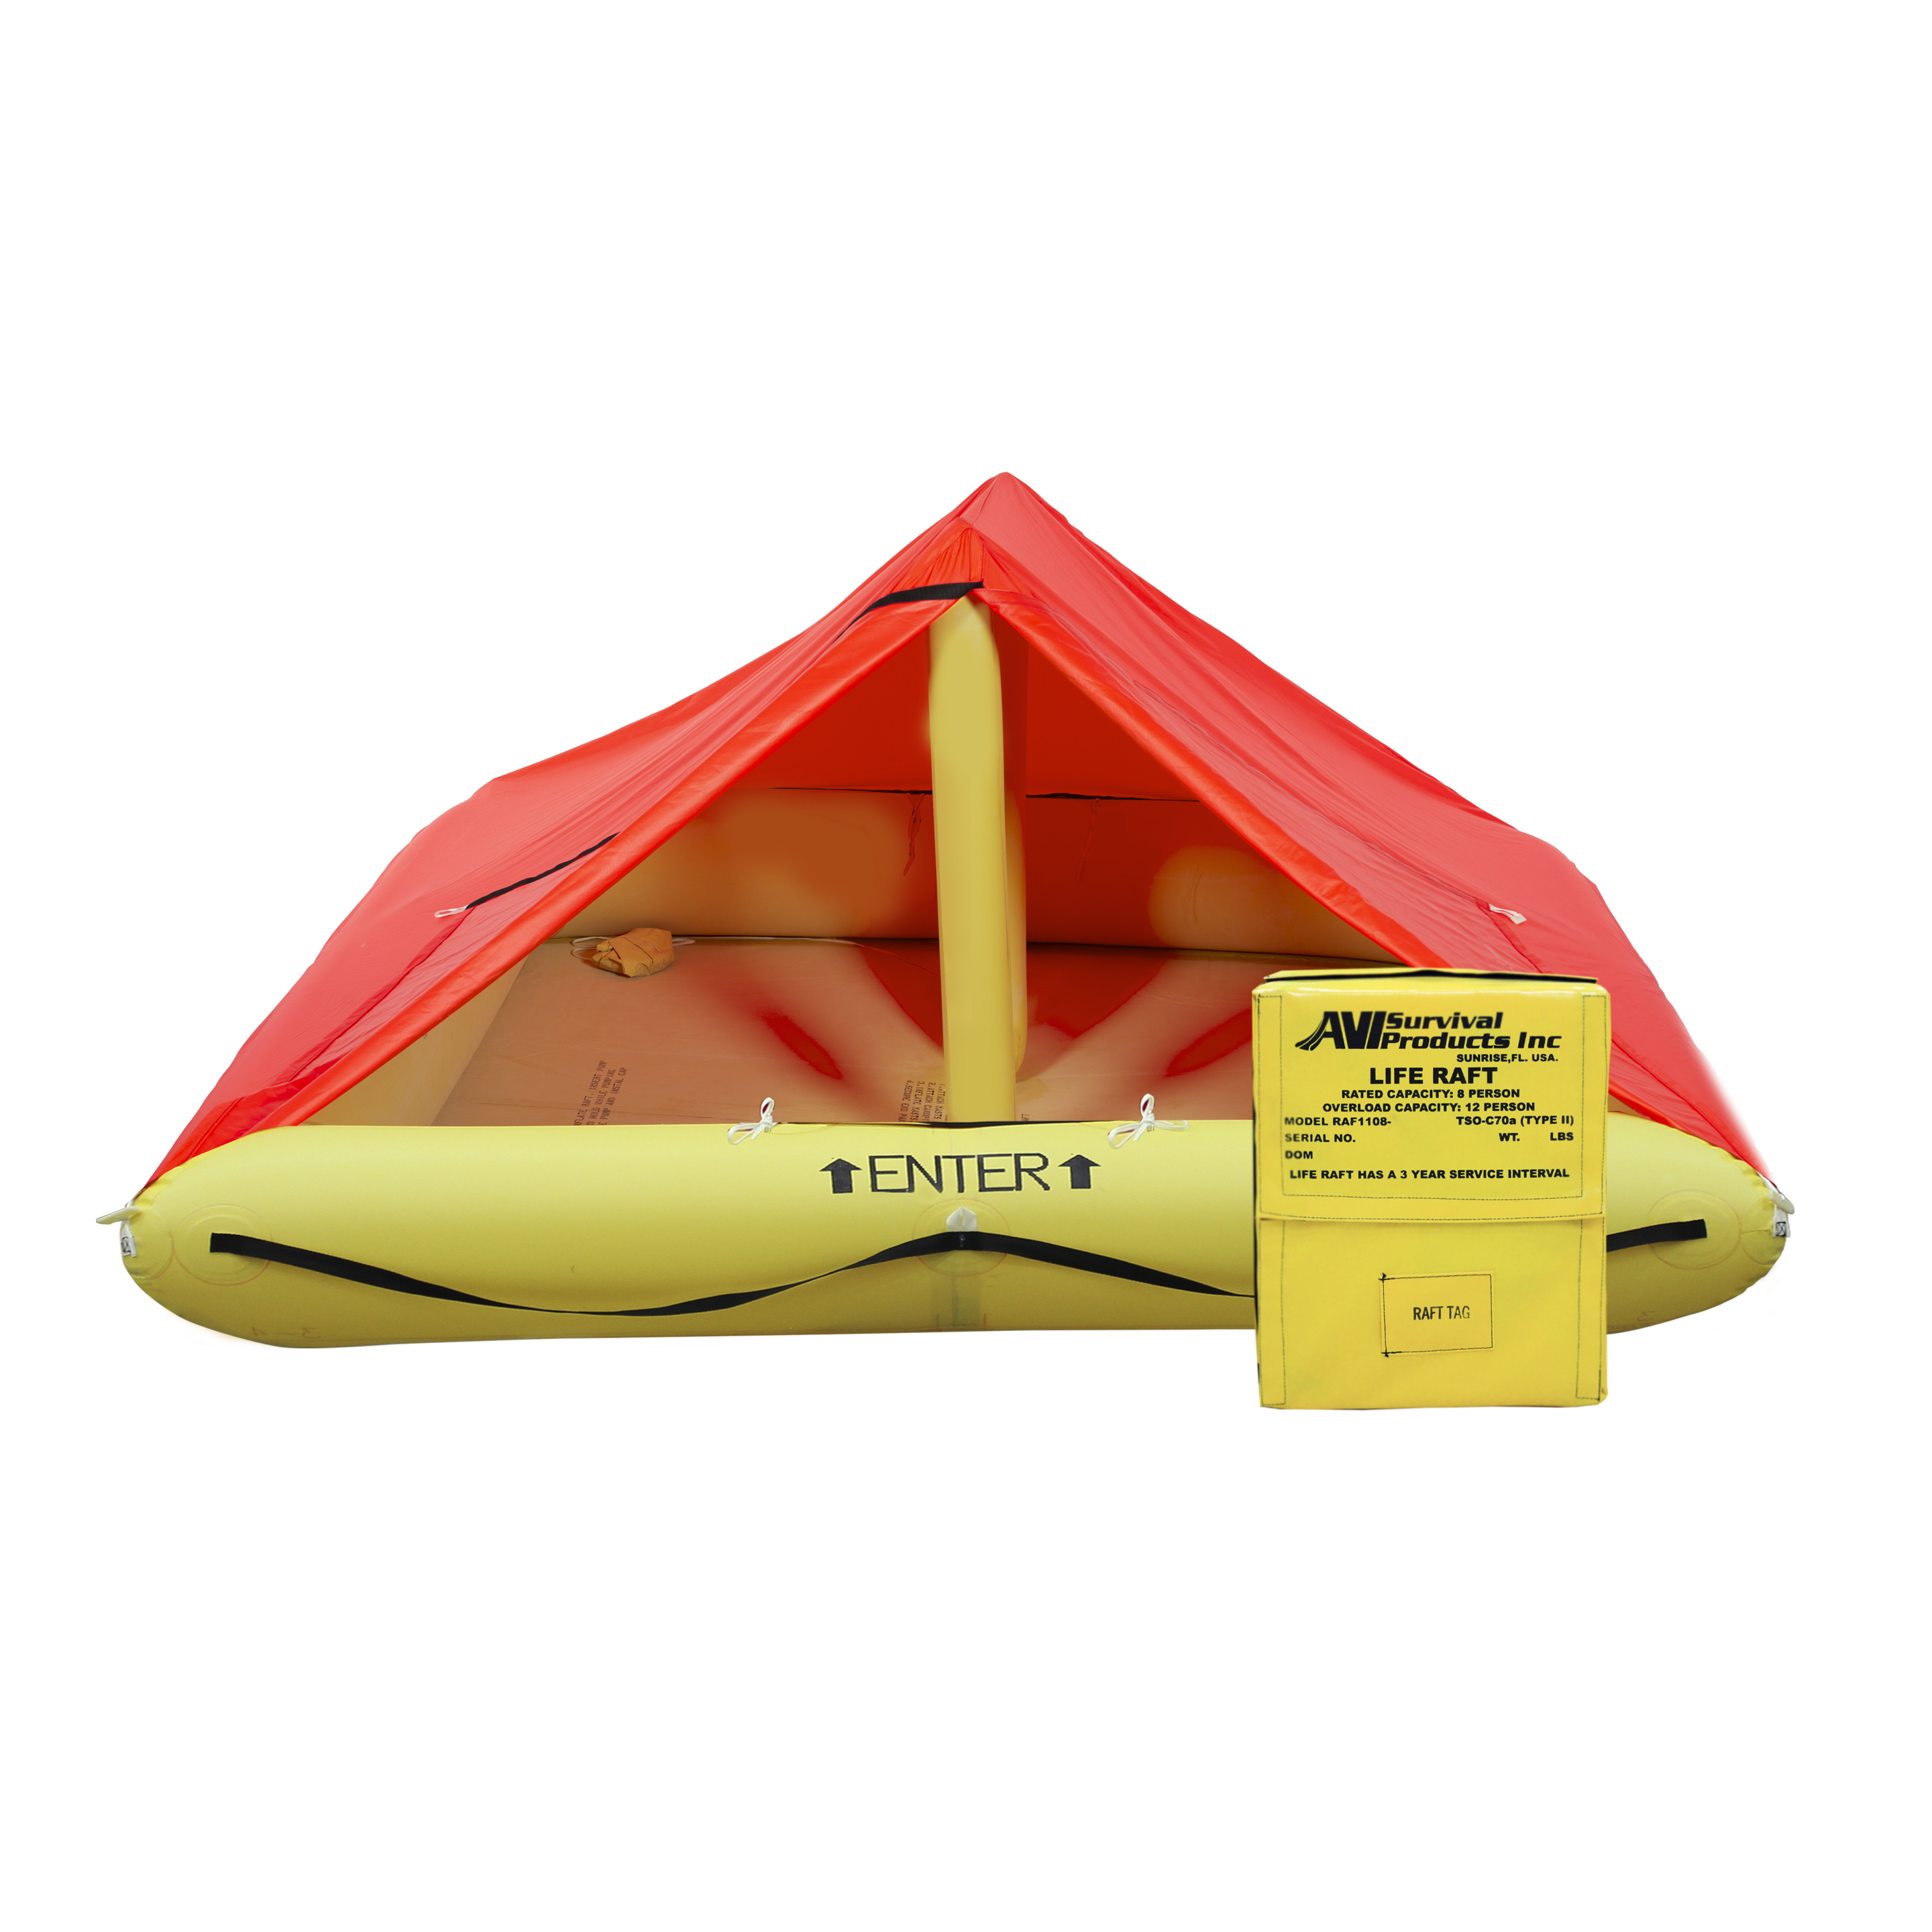 TSO 8 Person Life Raft with FAR 135 Survival Equipment Kit